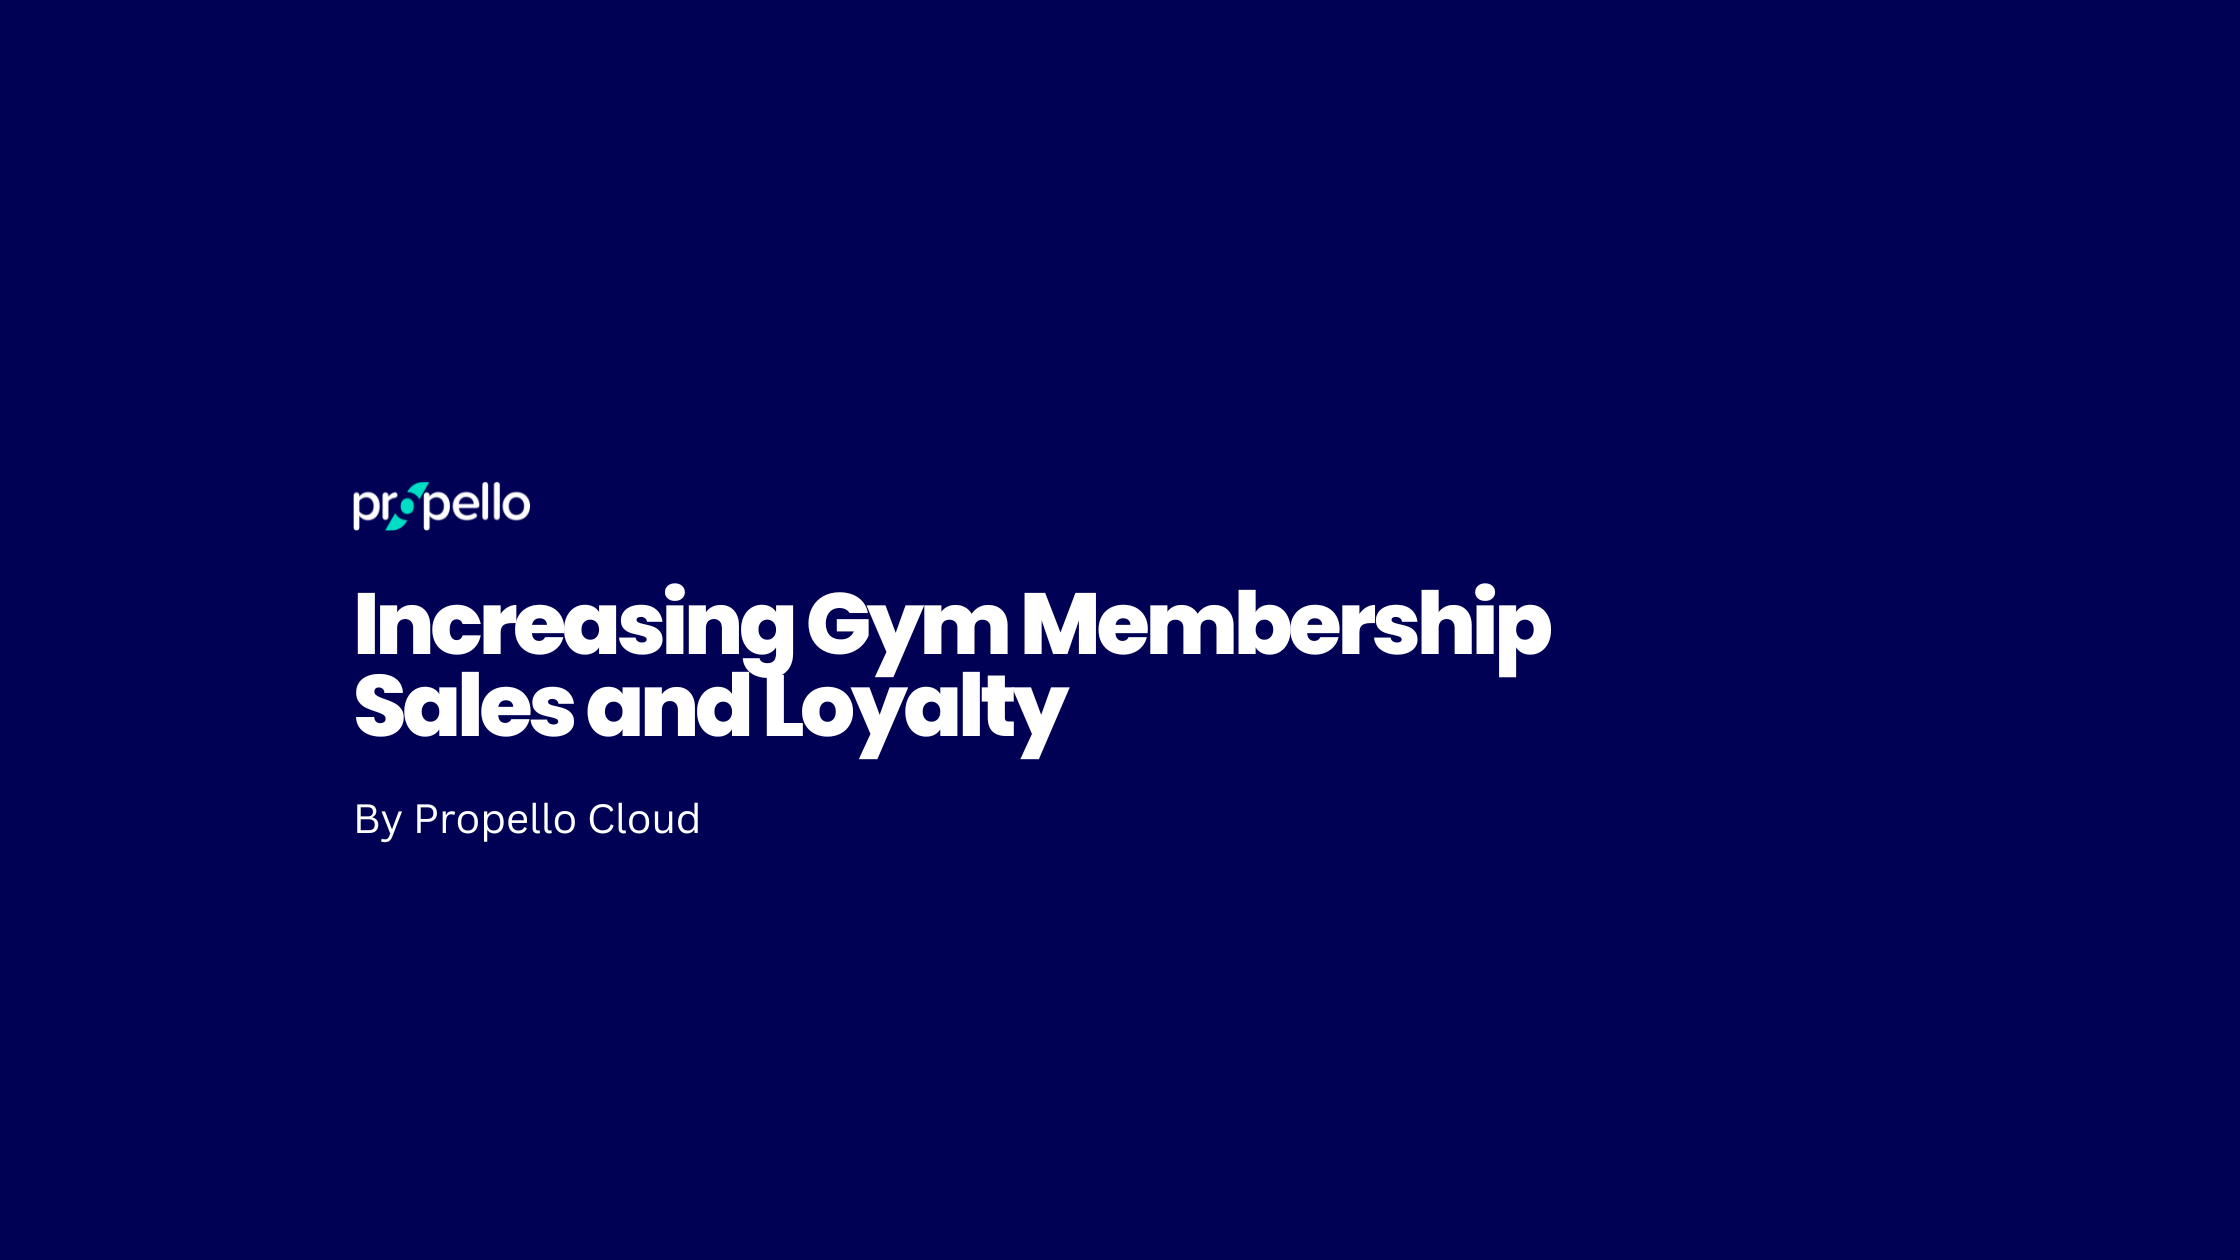 How to Increase Gym Membership Sales